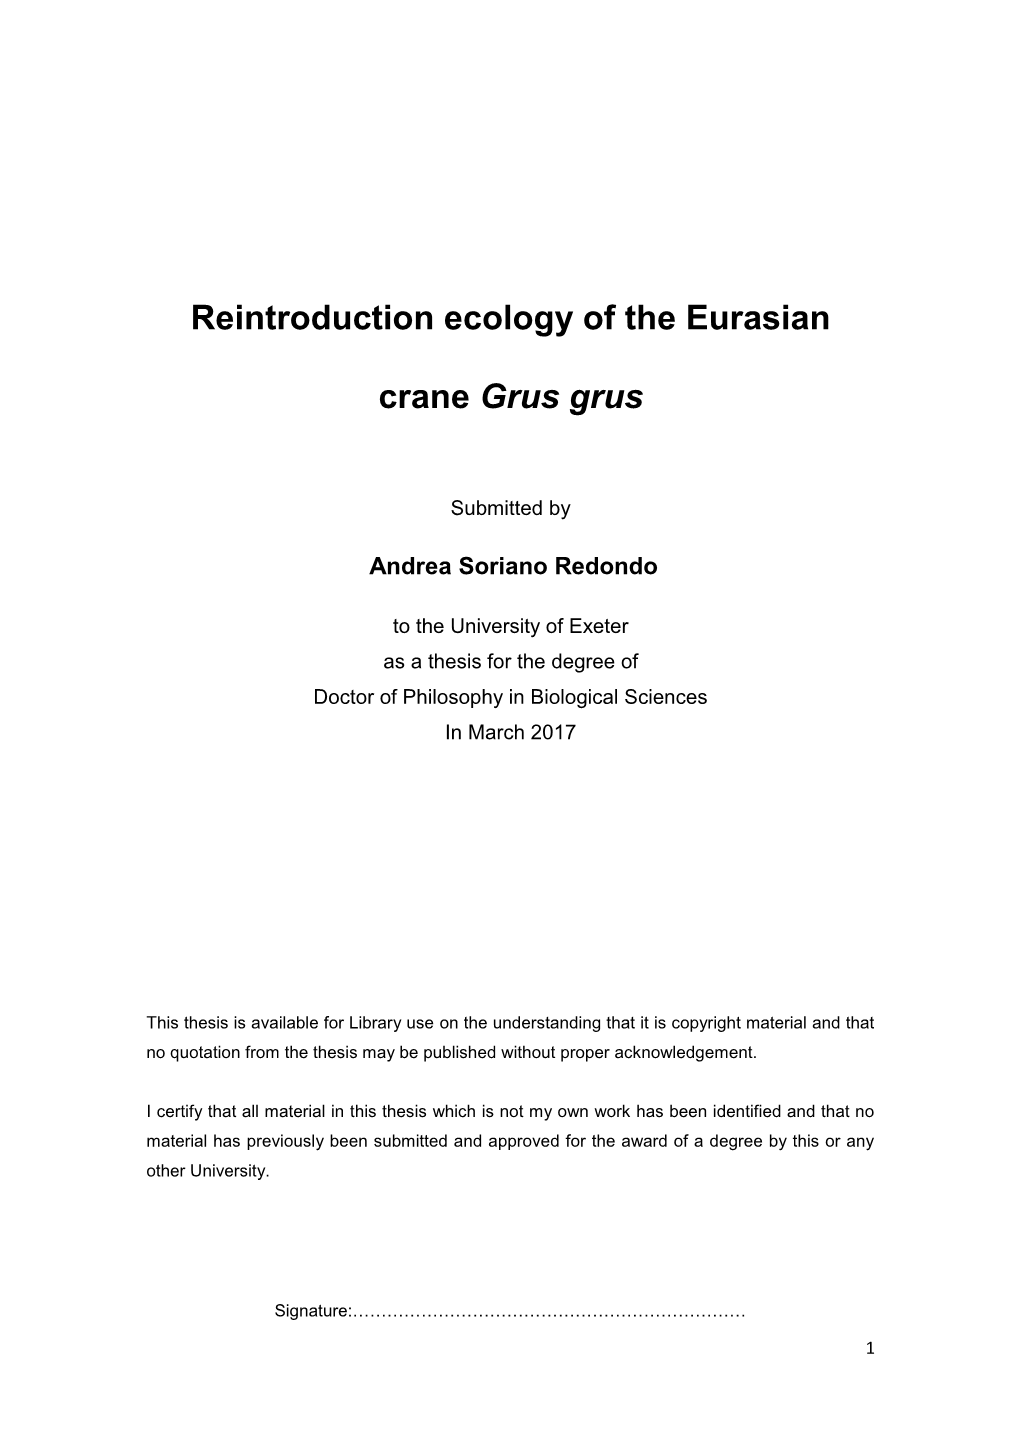 Reintroduction Ecology of the Eurasian Crane Grus Grus